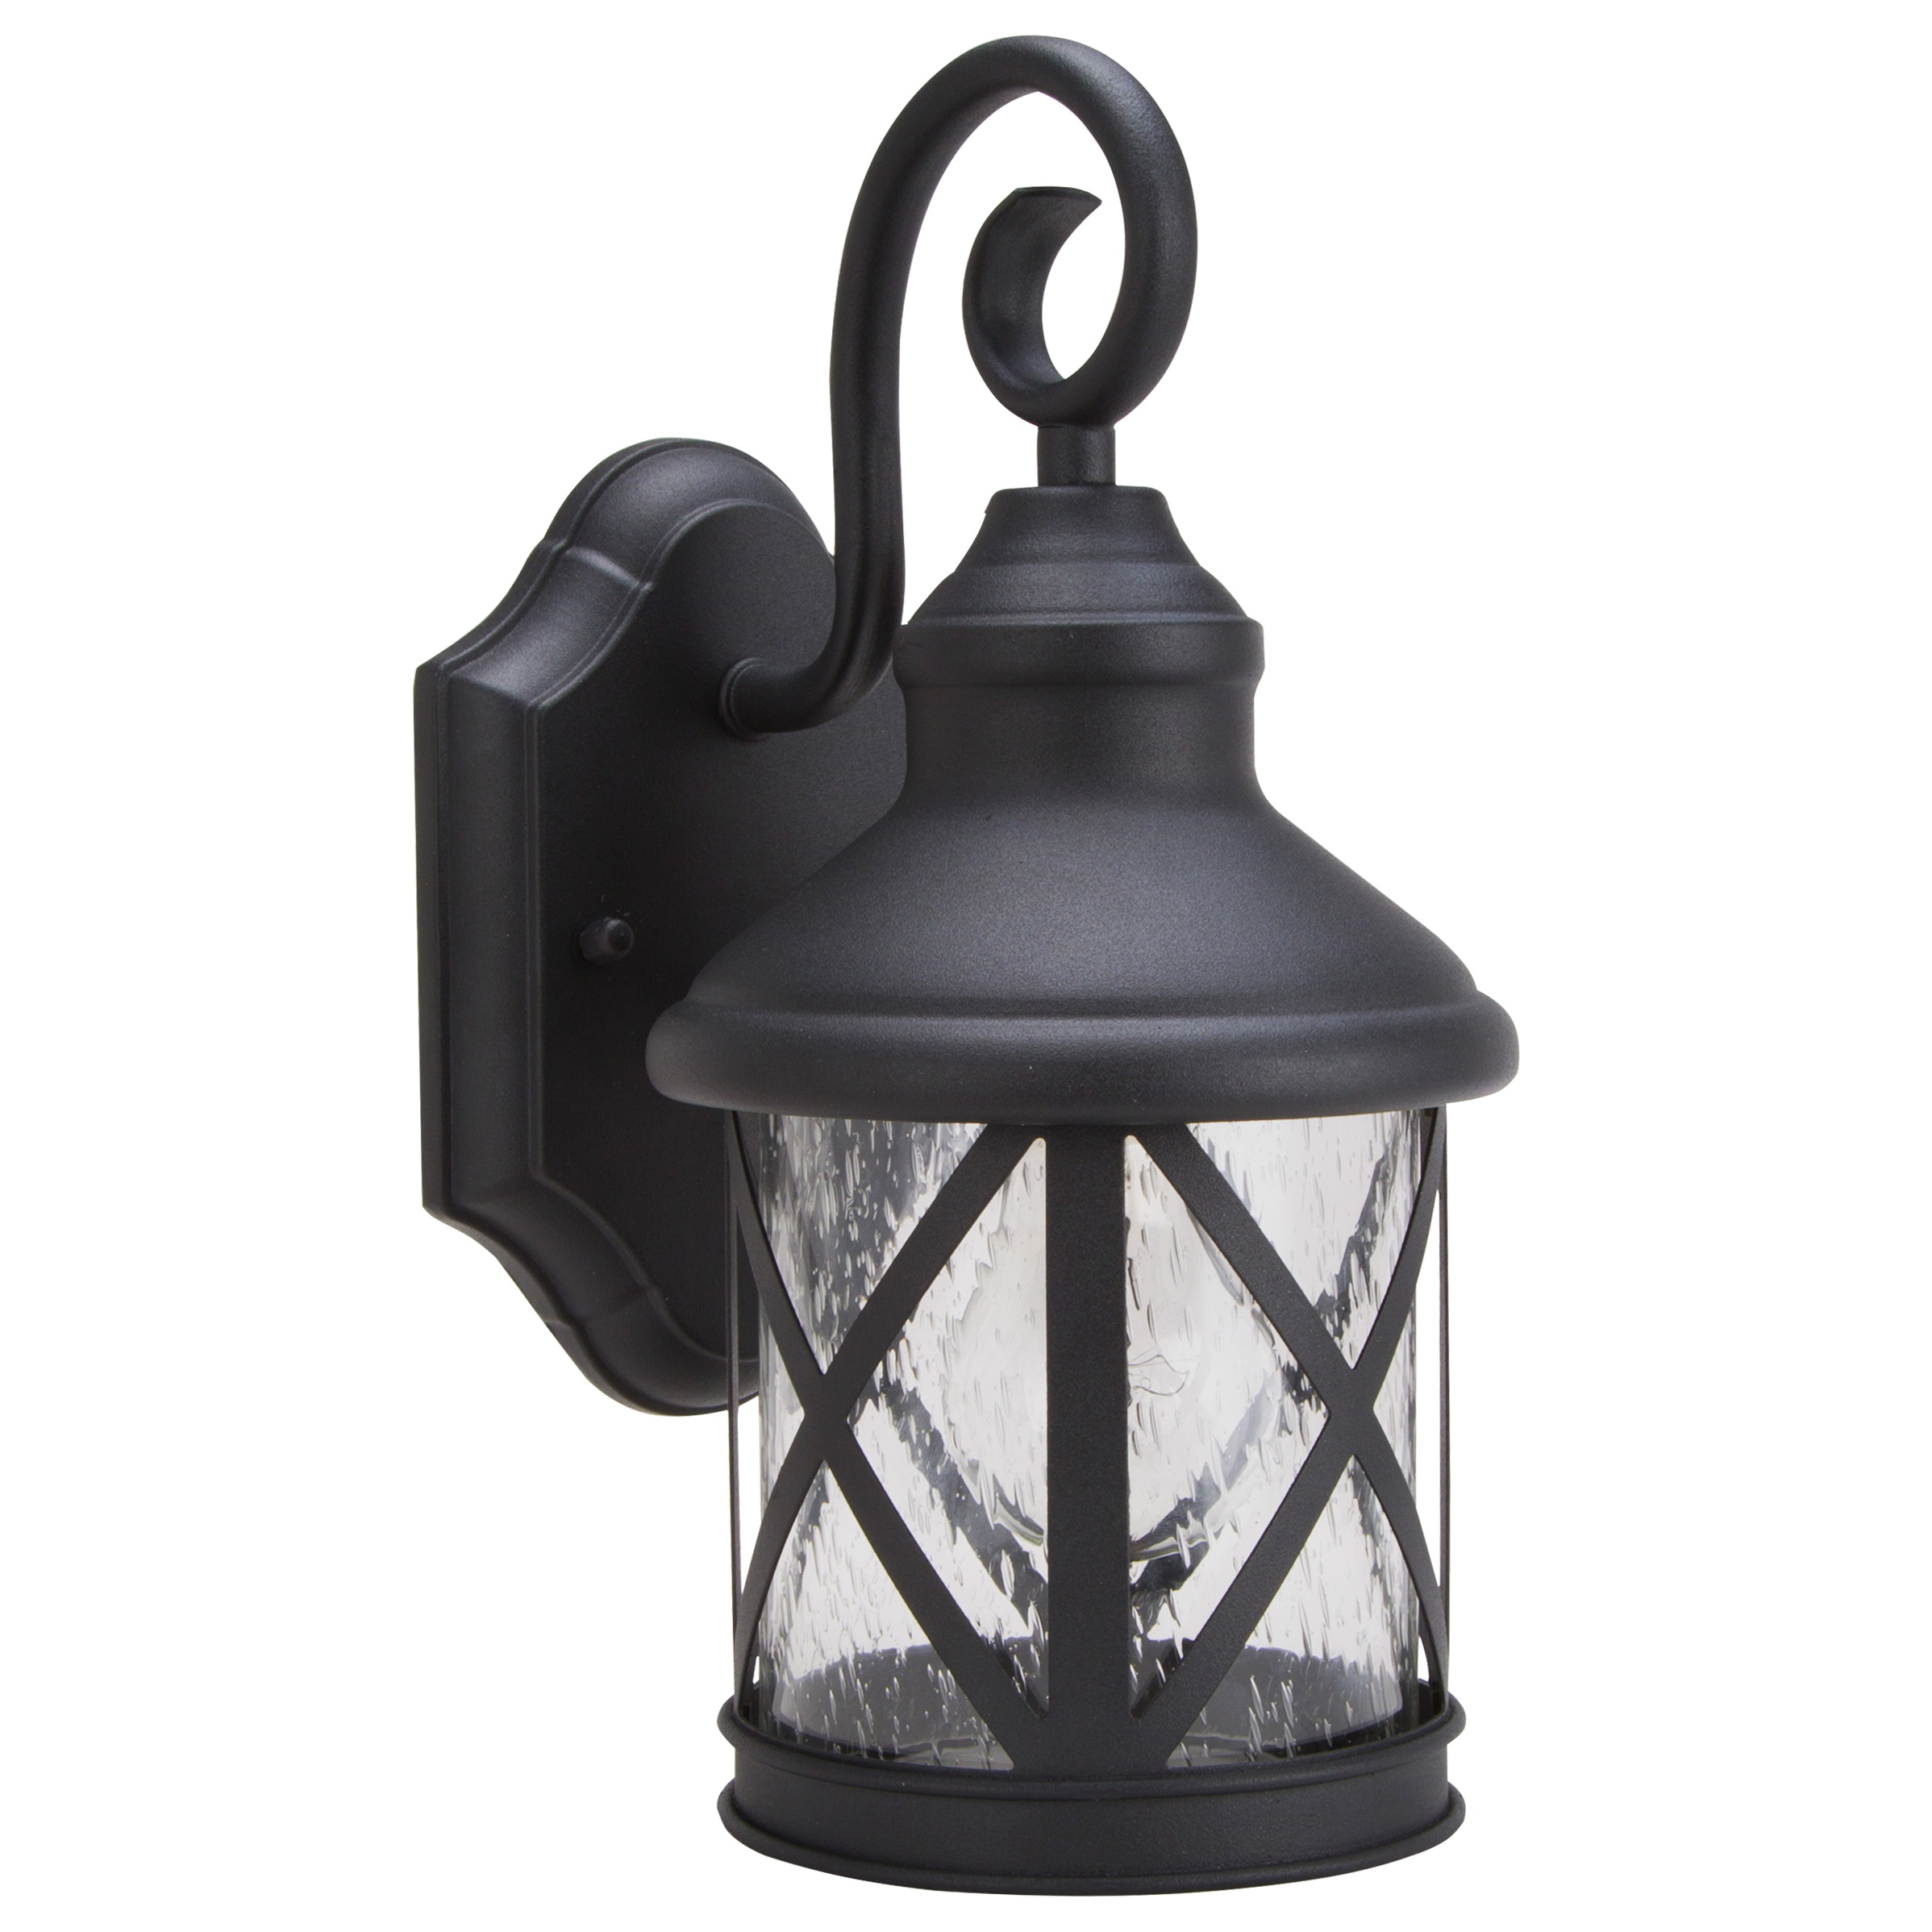 Boston Harbor LT-H01 Single Light Outdoor Wall Lantern, 120 V, 60 W, A19 or CFL Lamp, Steel Fixture, Black Fixture - 1